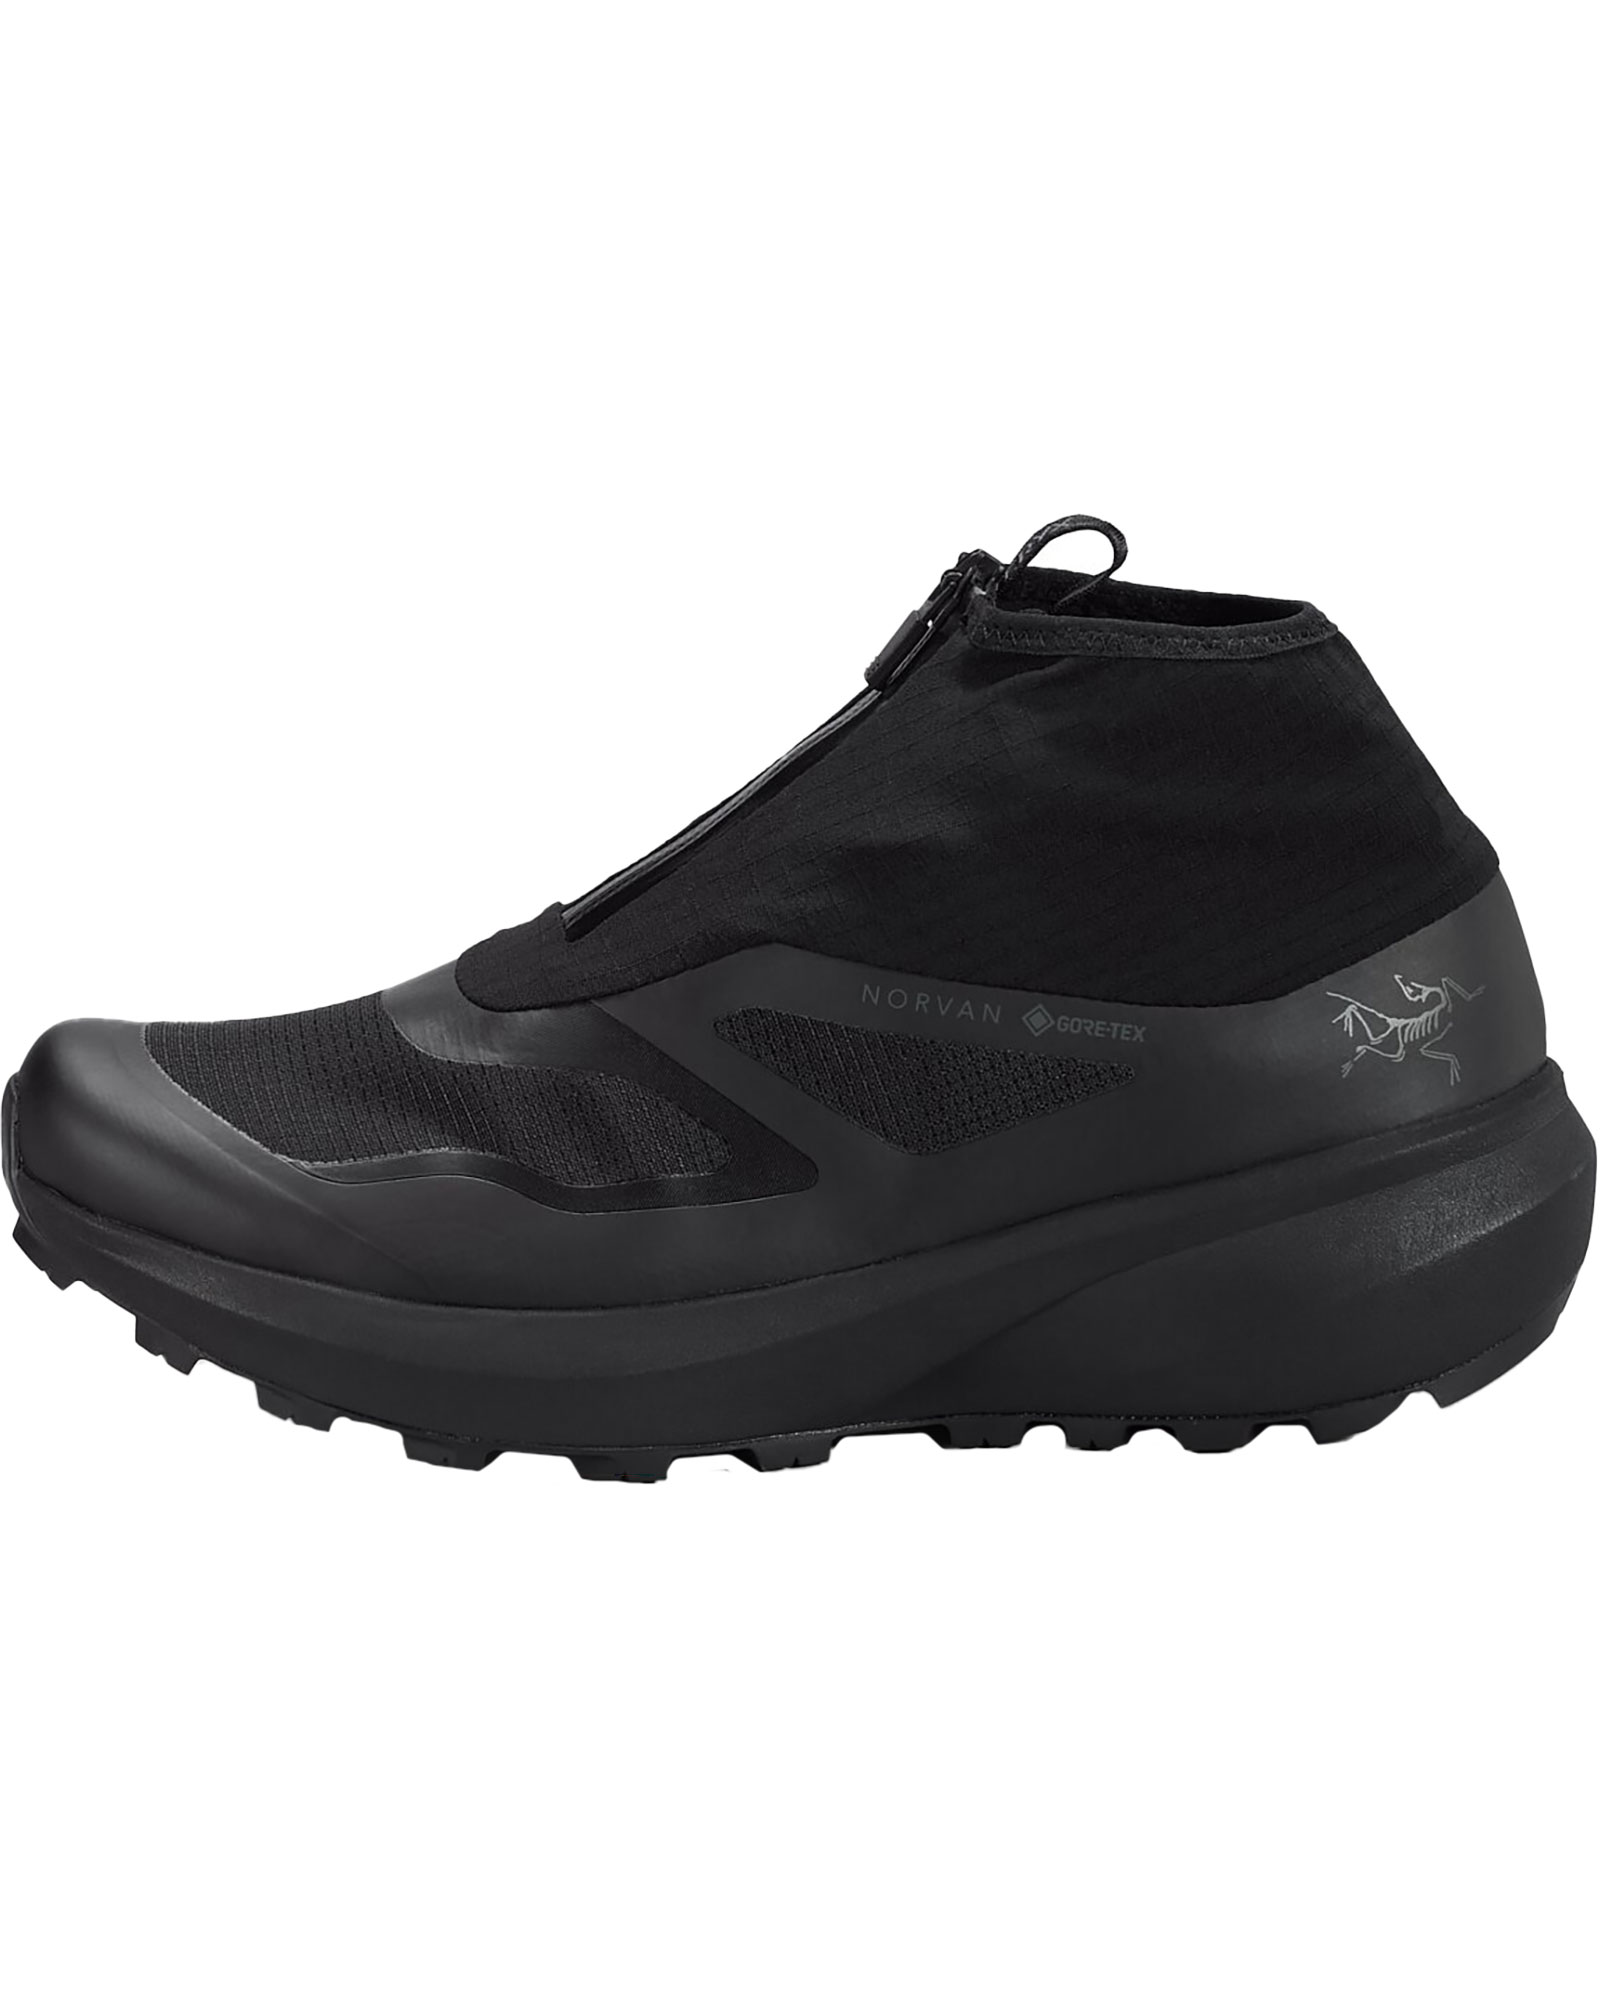 Arc’teryx Norvan Nivalis GORE TEX Trail Shoes - Black/Black UK 9